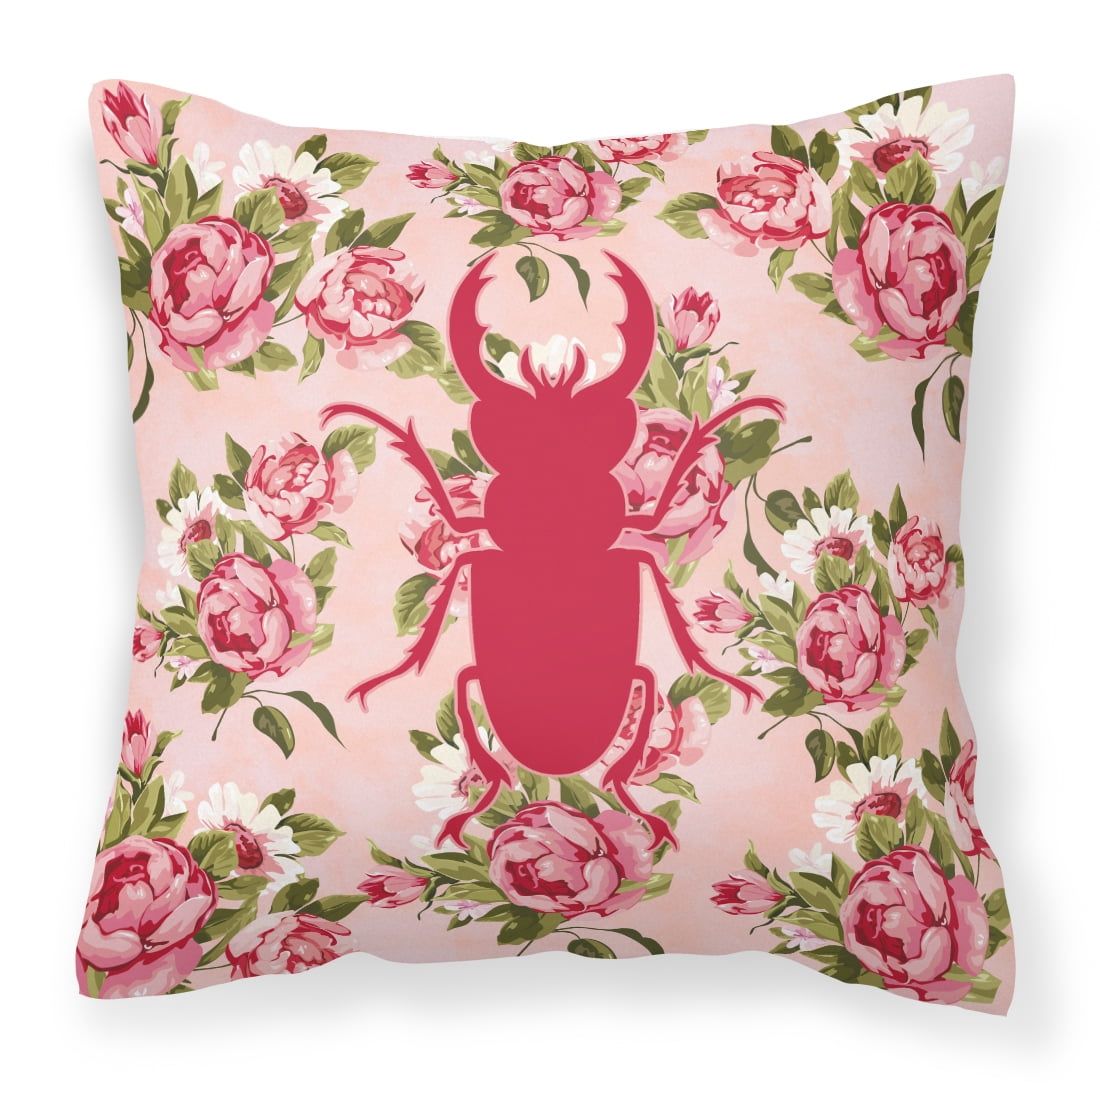 [RDY] [送料無料] ビートルシャビーシックピンクローズファブリック装飾枕 [楽天海外通販] | Beetle Shabby Chic Pink Roses Fabric Decorative Pillow